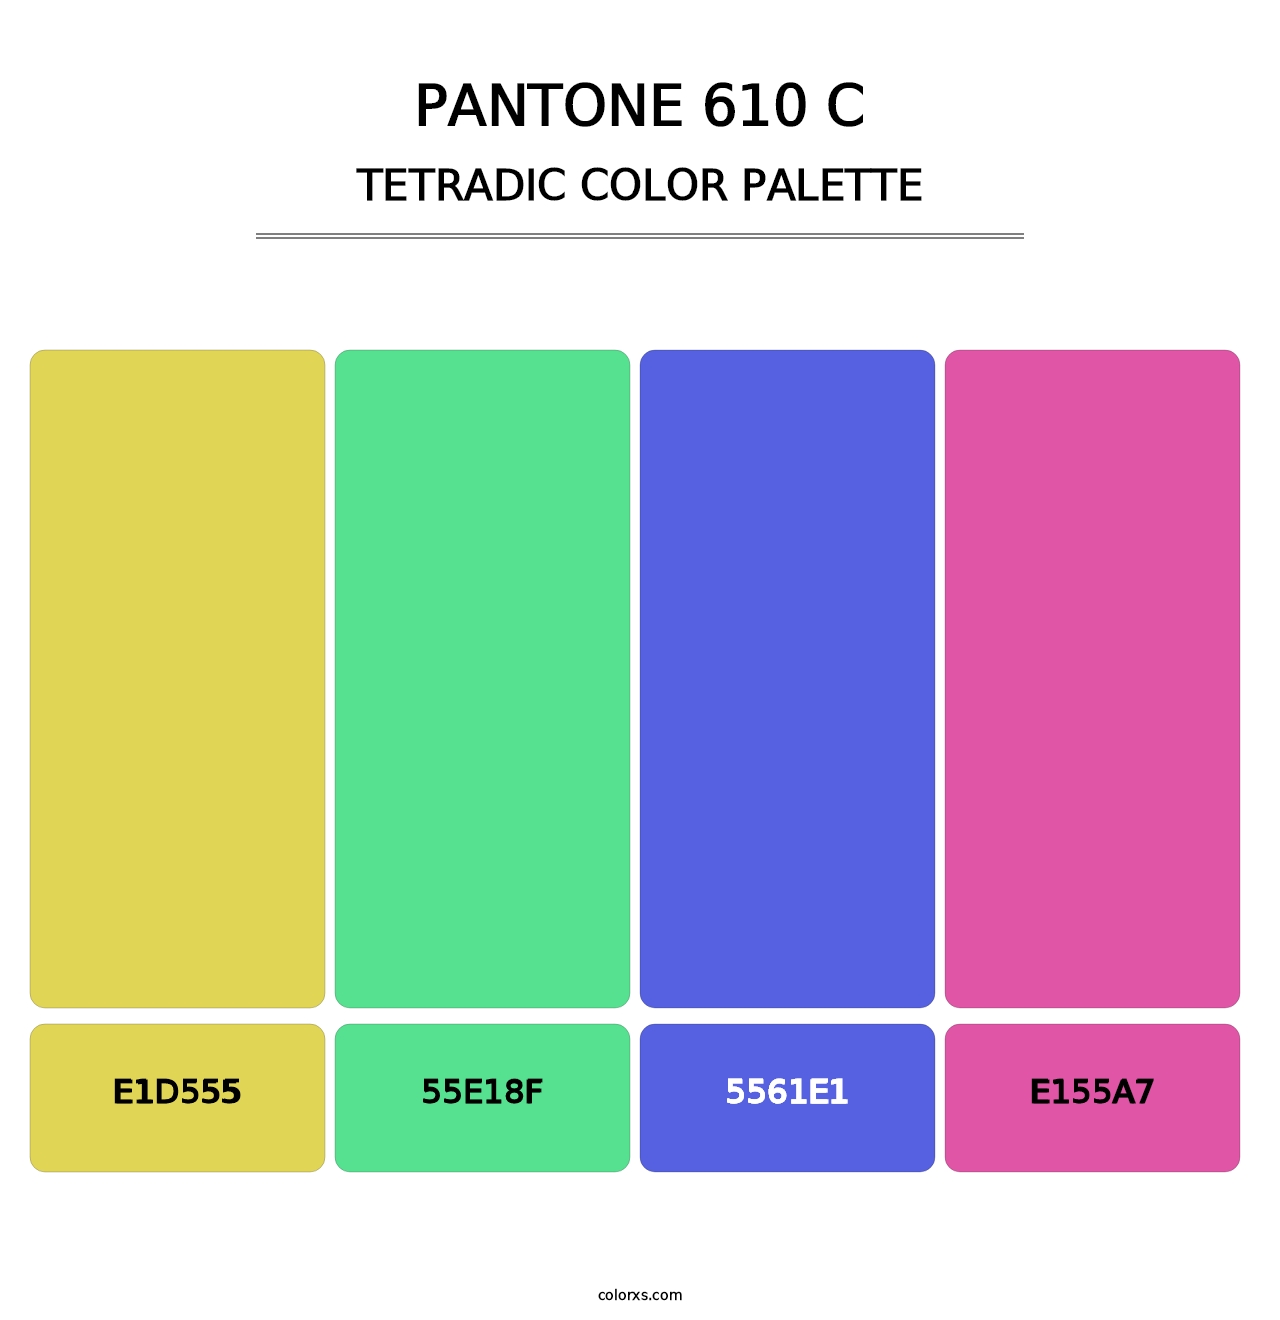 PANTONE 610 C - Tetradic Color Palette